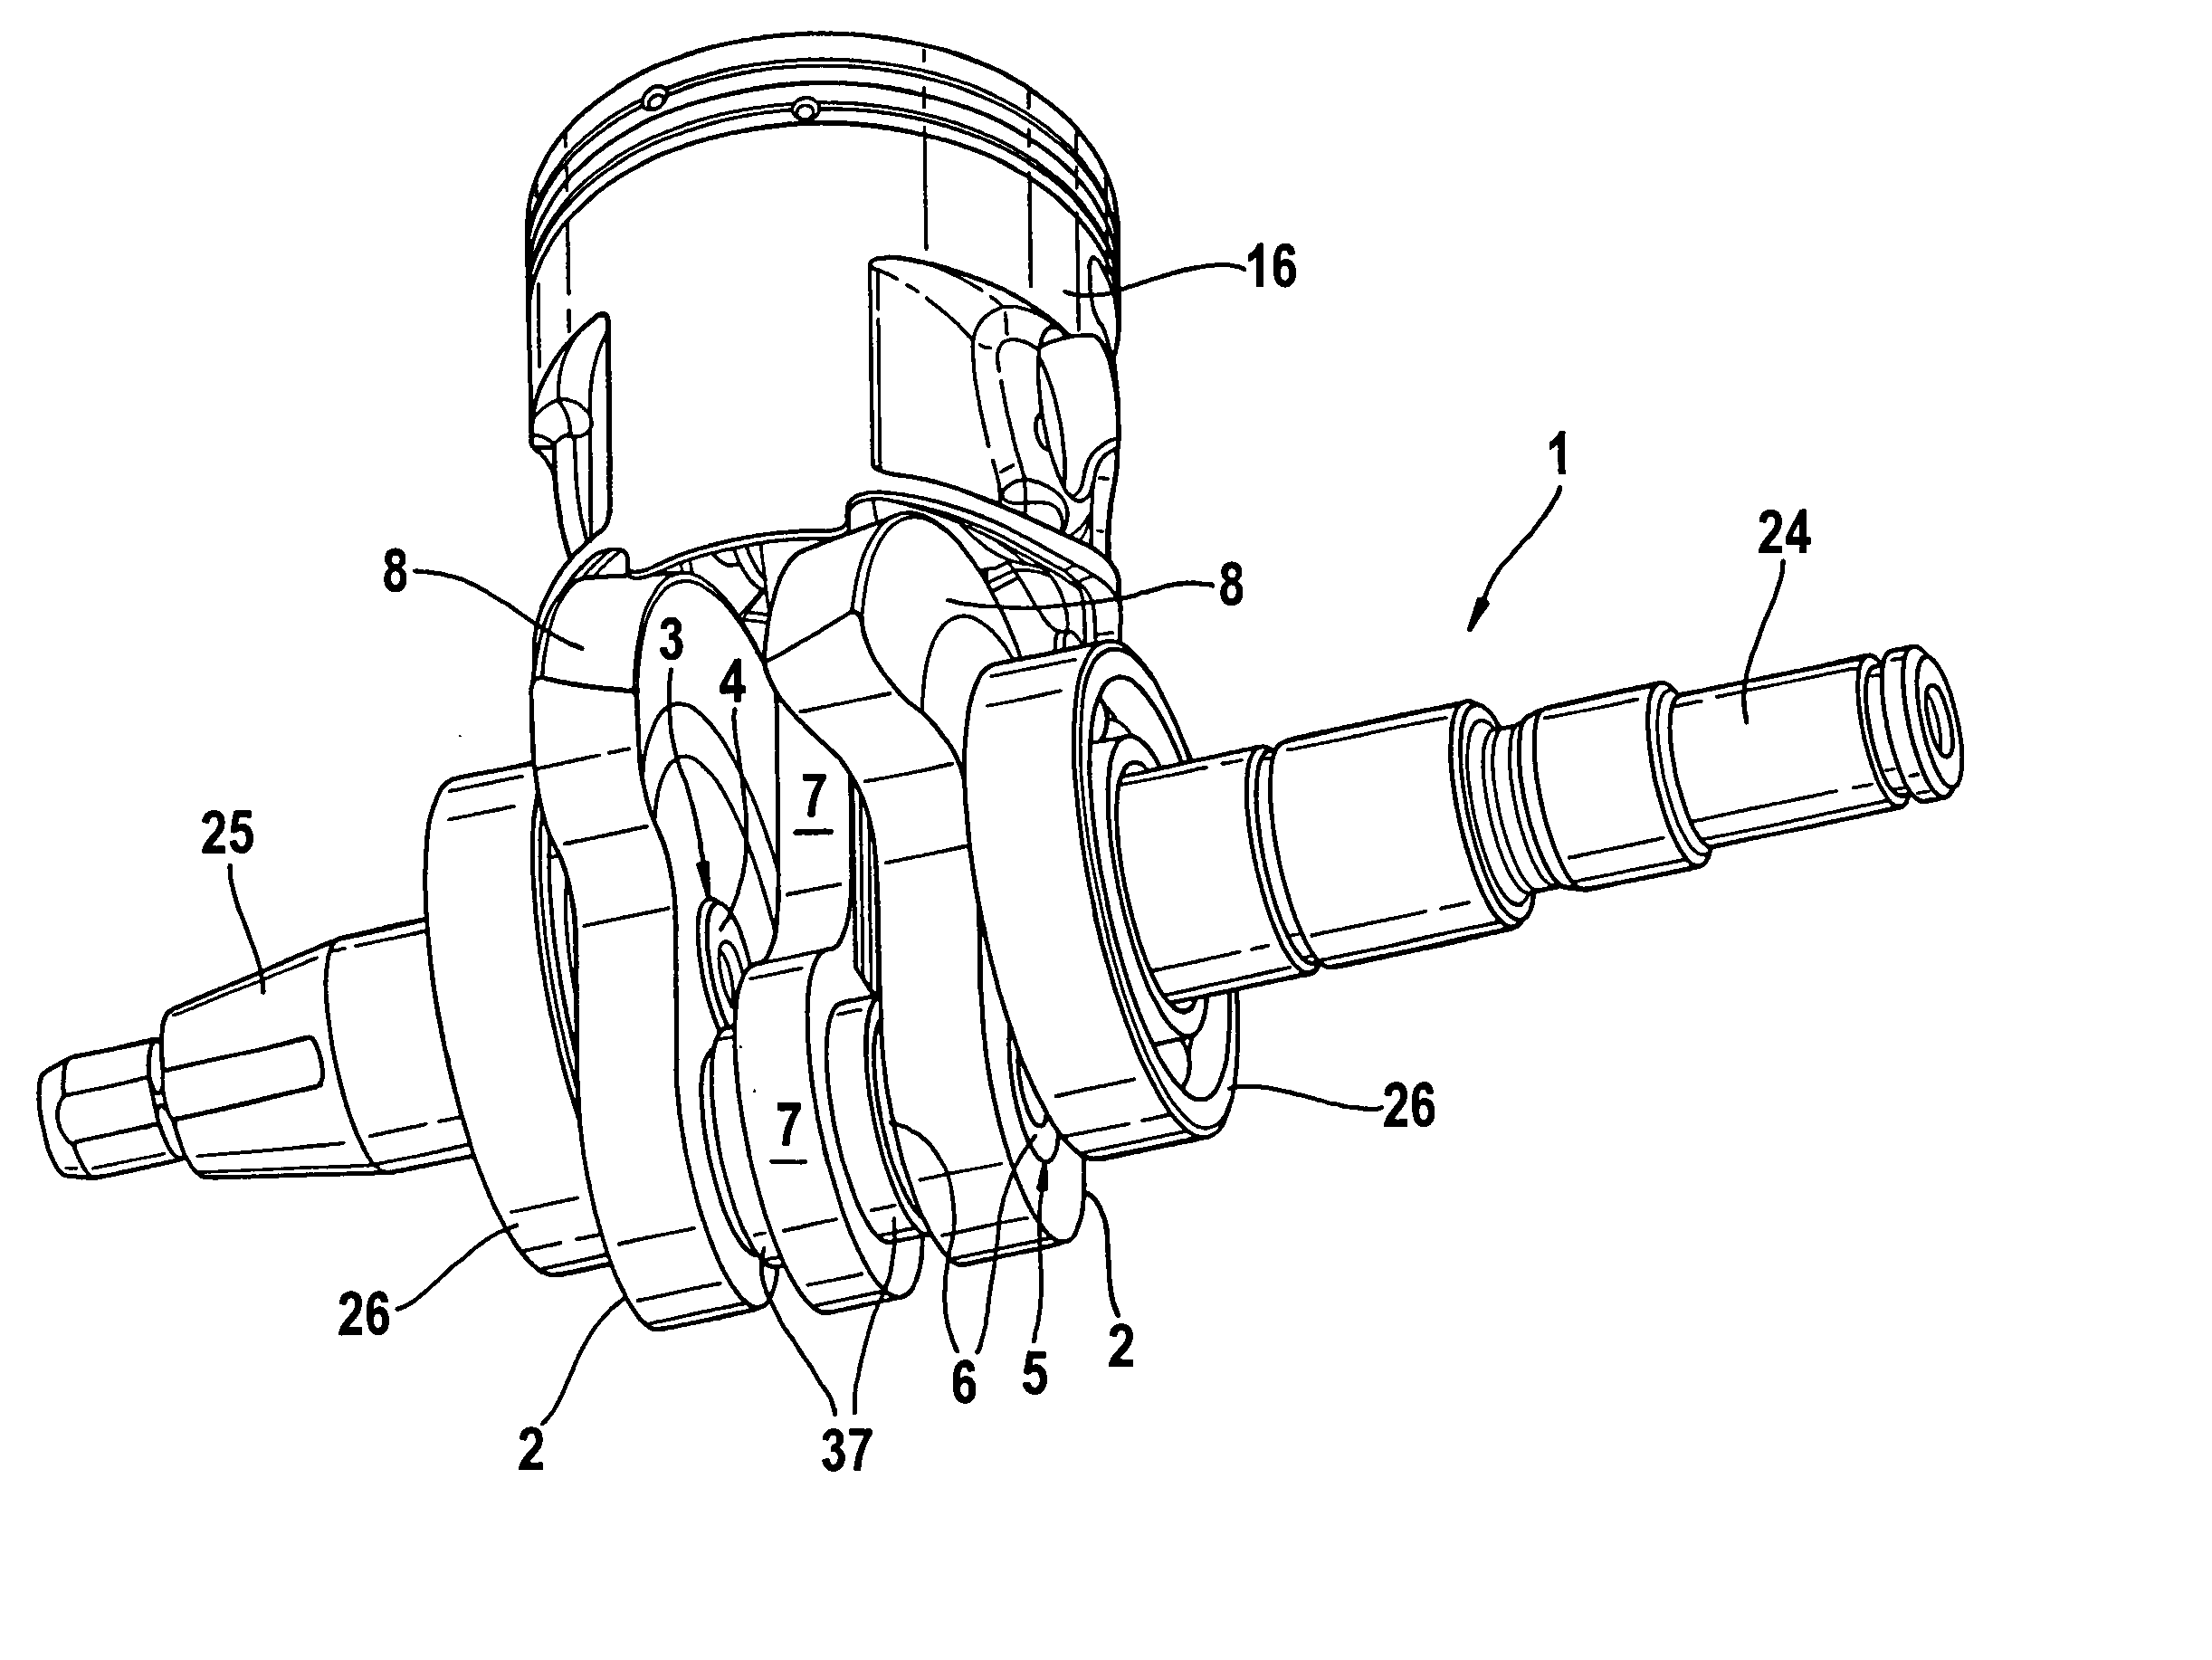 Crankshaft assembly of an internal combustion engine